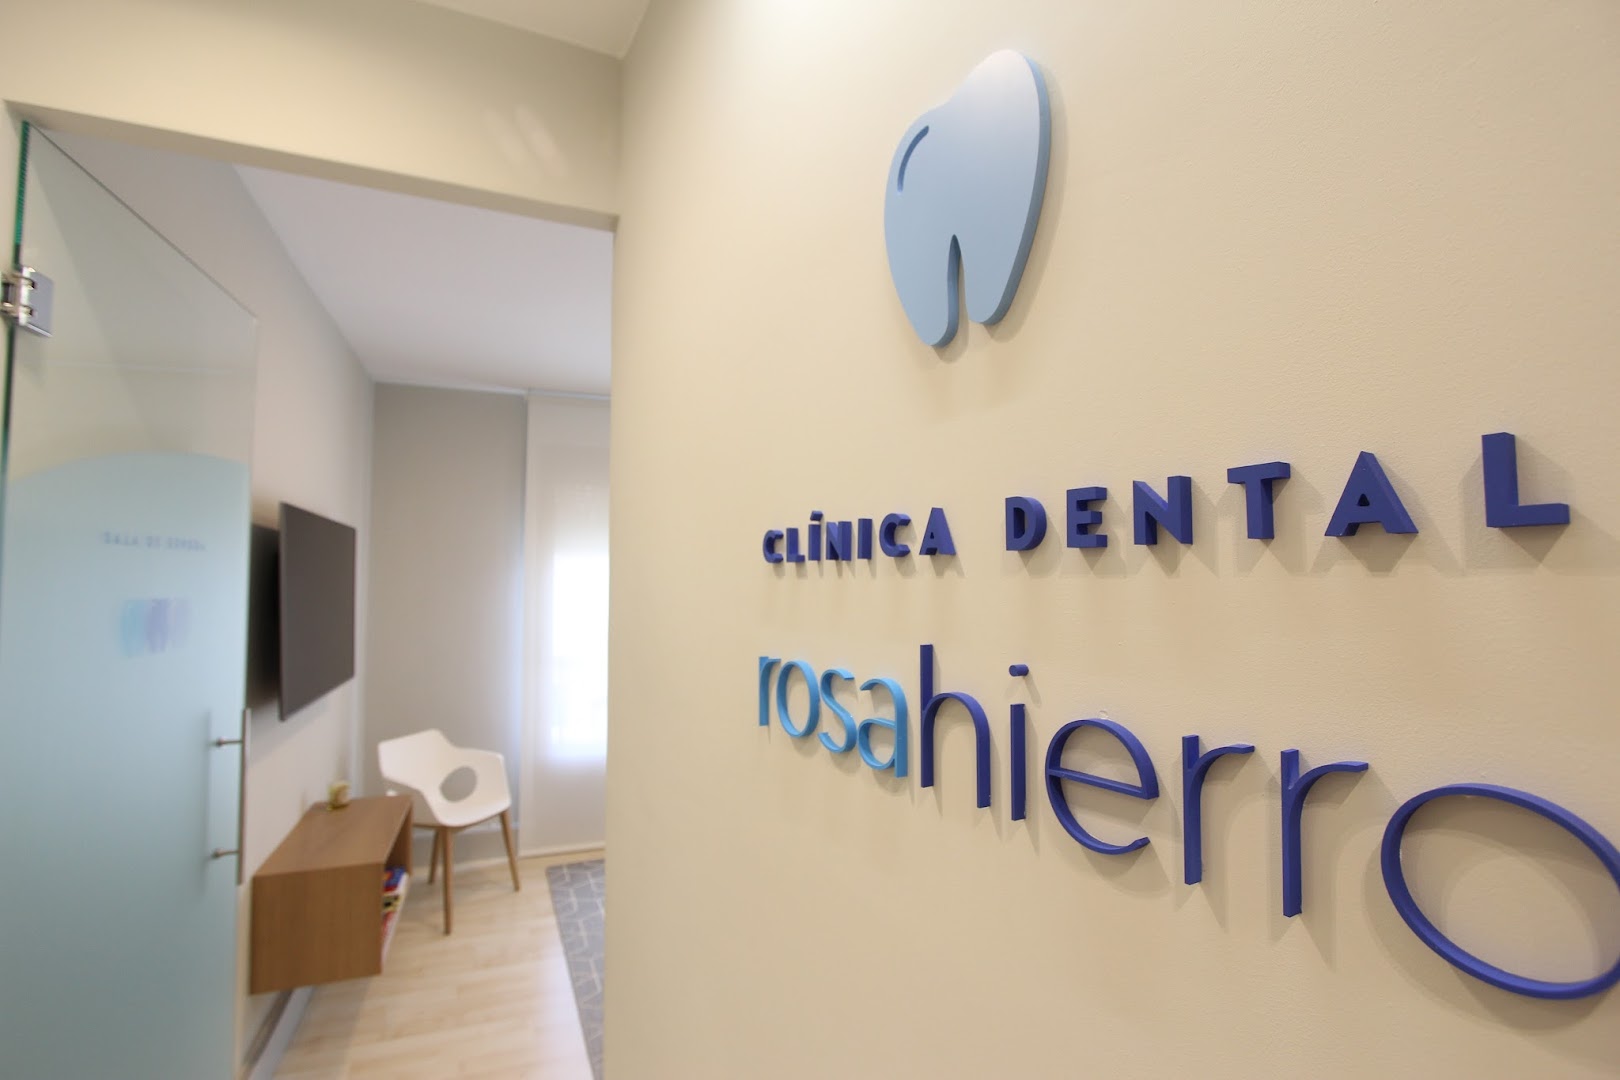 Clinica Dental Rosa Hierro